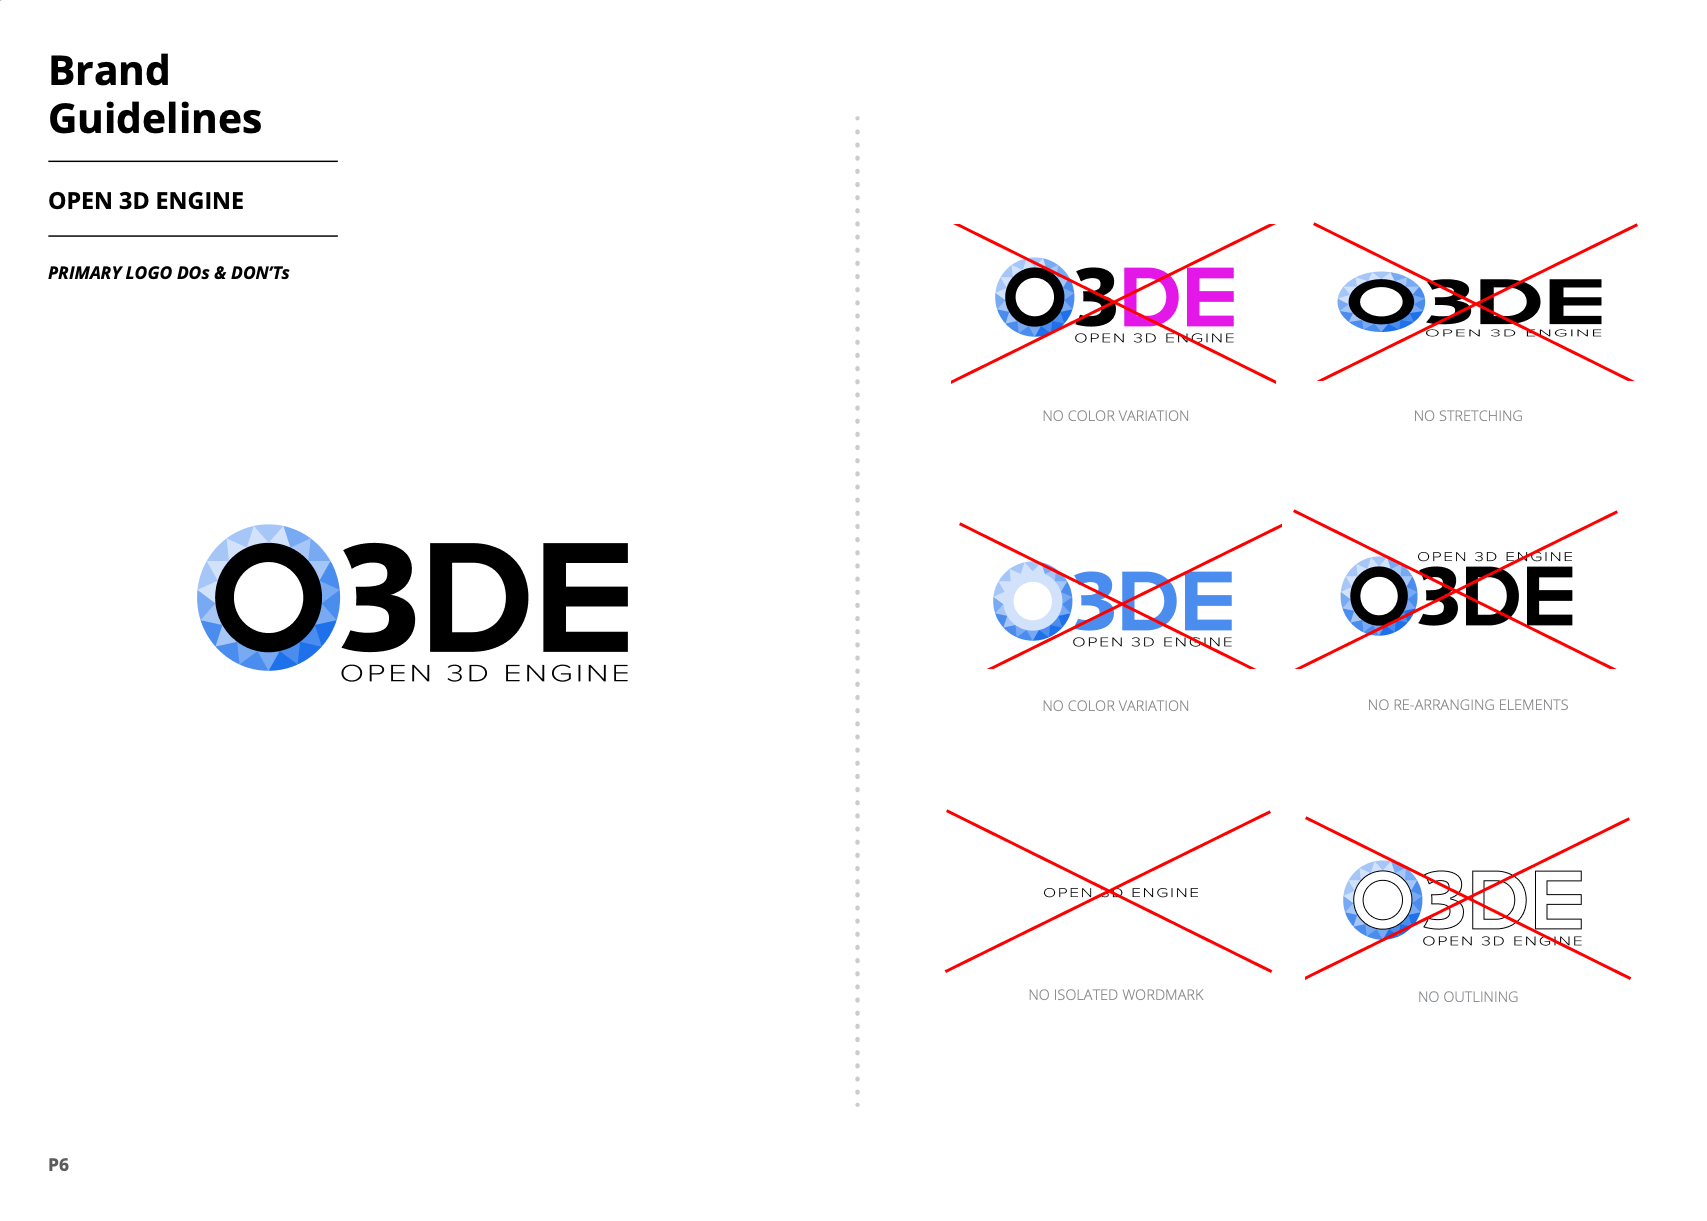 The dos and don'ts of using the O3DE logo.